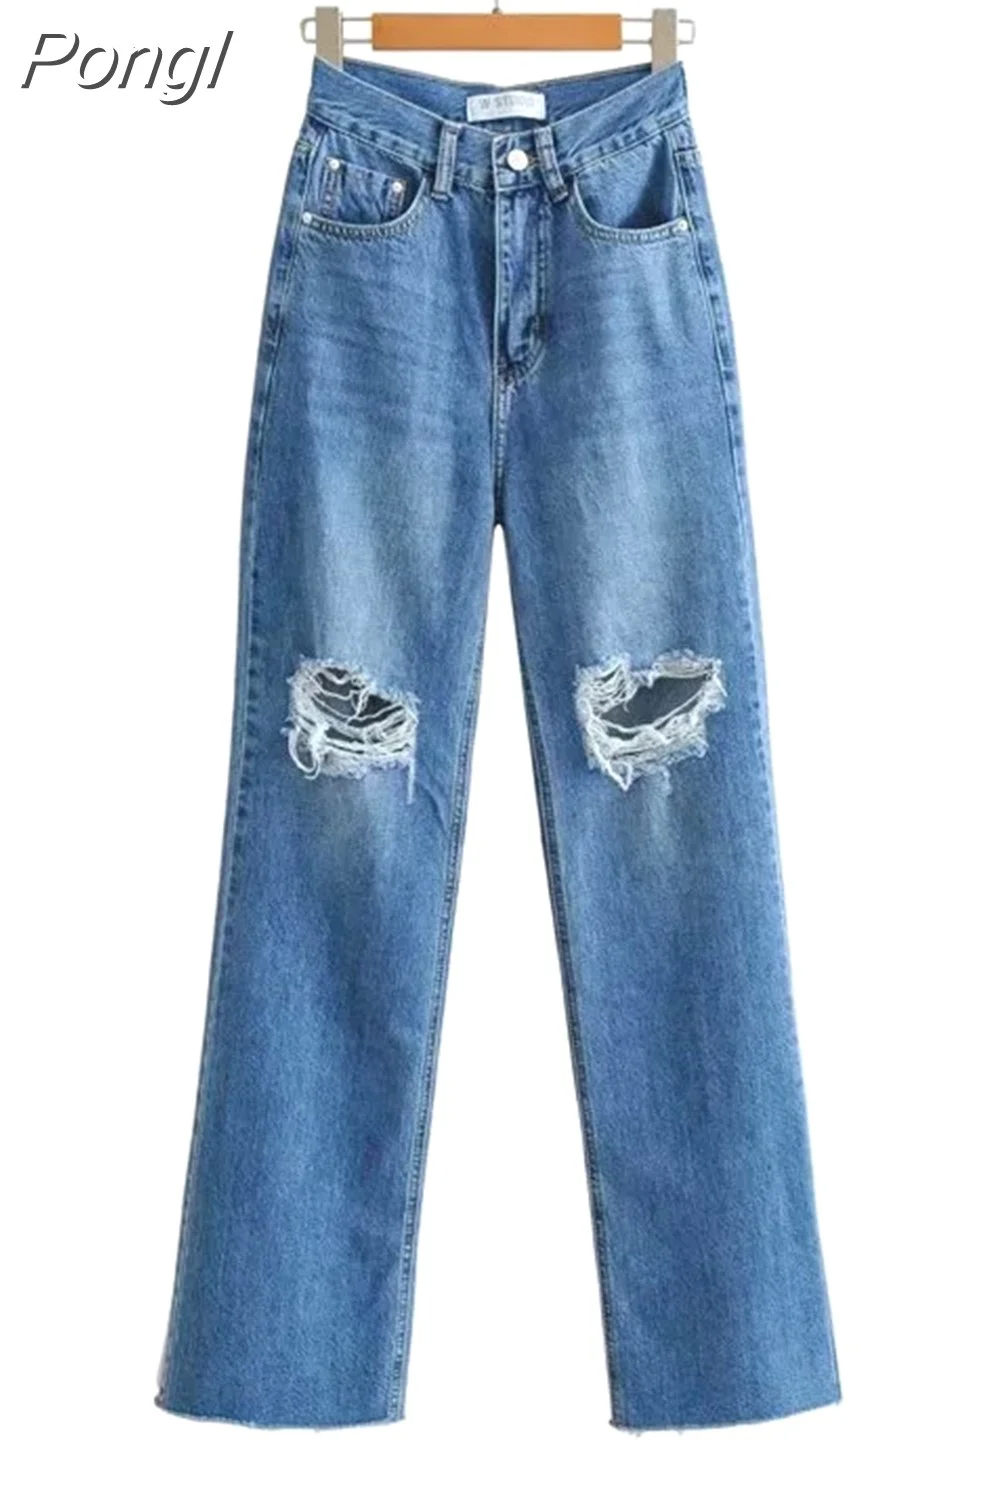 Pongl Fashion Denim Ripped Distressed Jeans Woman High Waist Flare Pants Bottom Streetwear Trousers Pants Jeans Ladies